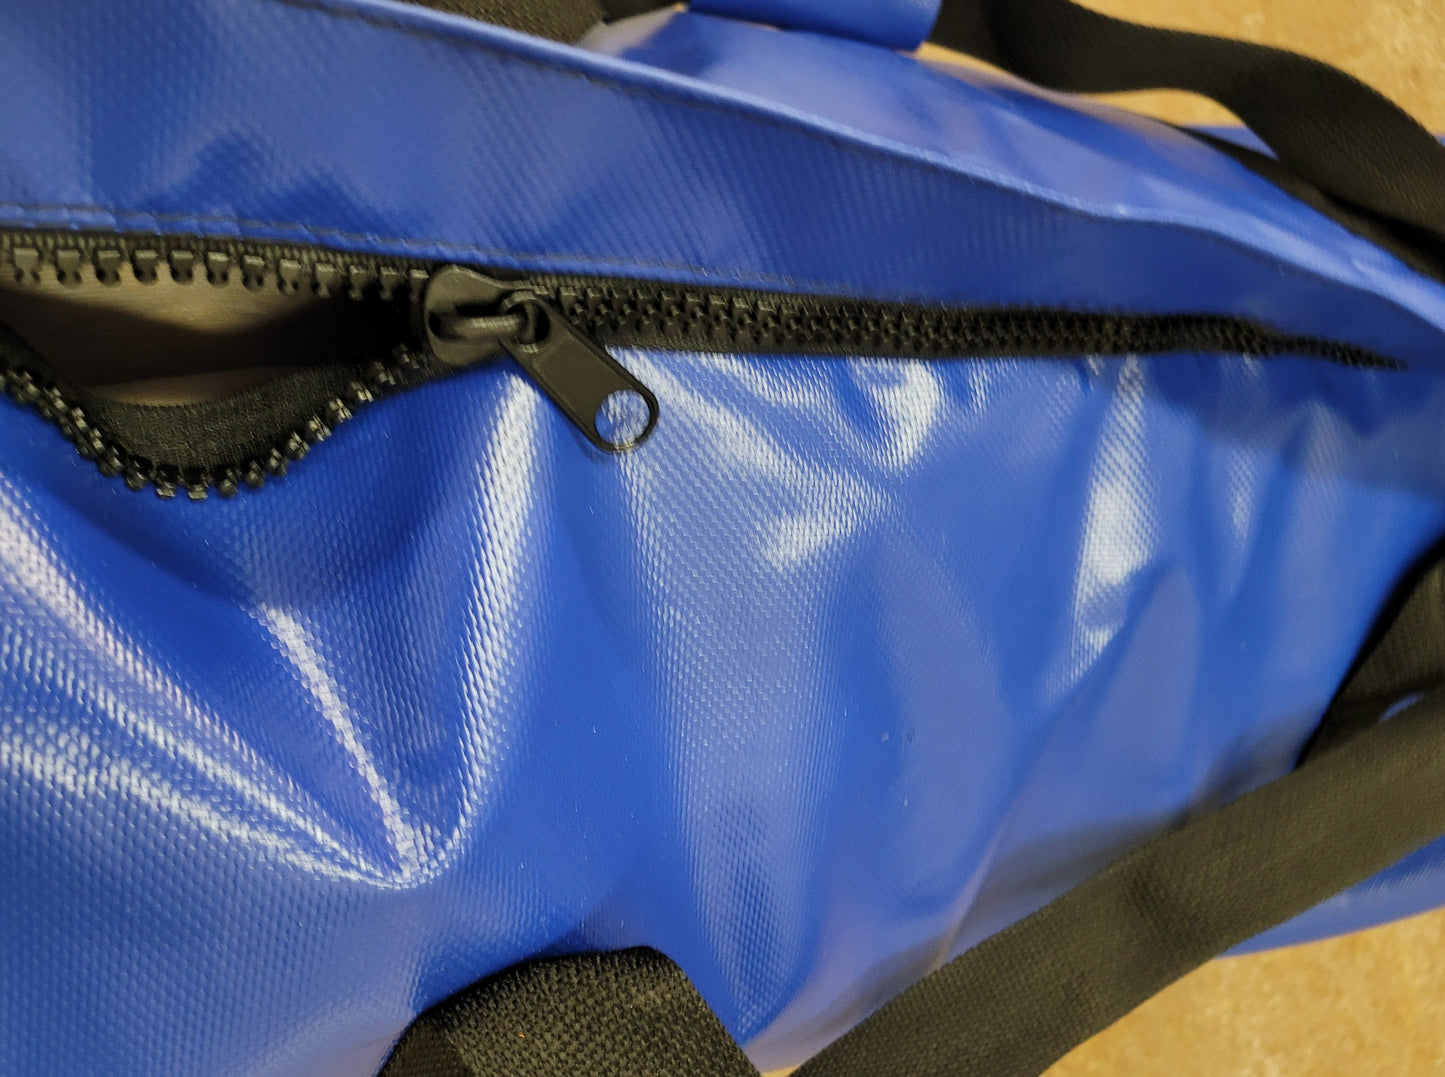 Blue Creek Gear Bag